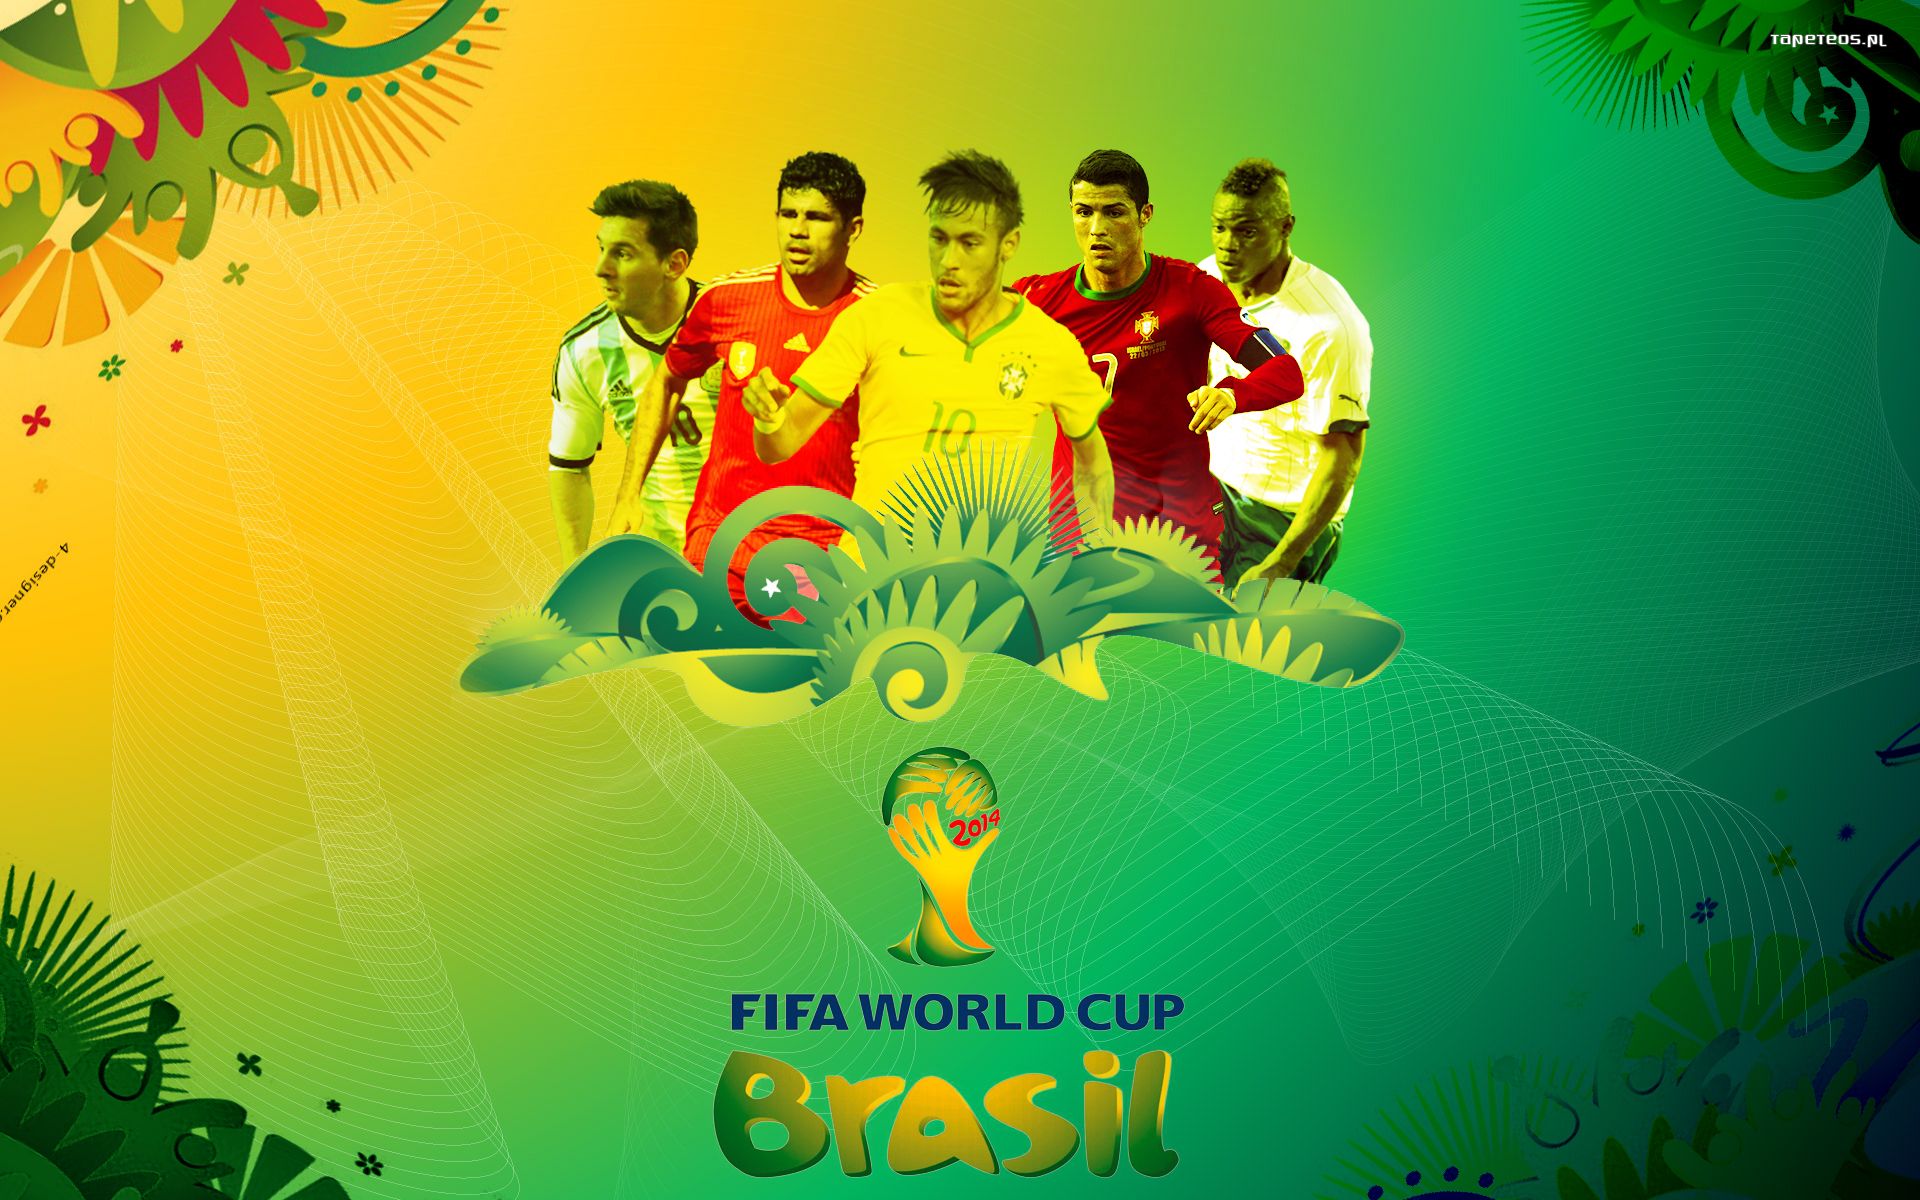 Fifa brazil. ФИФА ворлд кап 2014. 2014 FIFA World Cup Brazil. FIFA Brazil 2014. ЧМ 2014 лого.